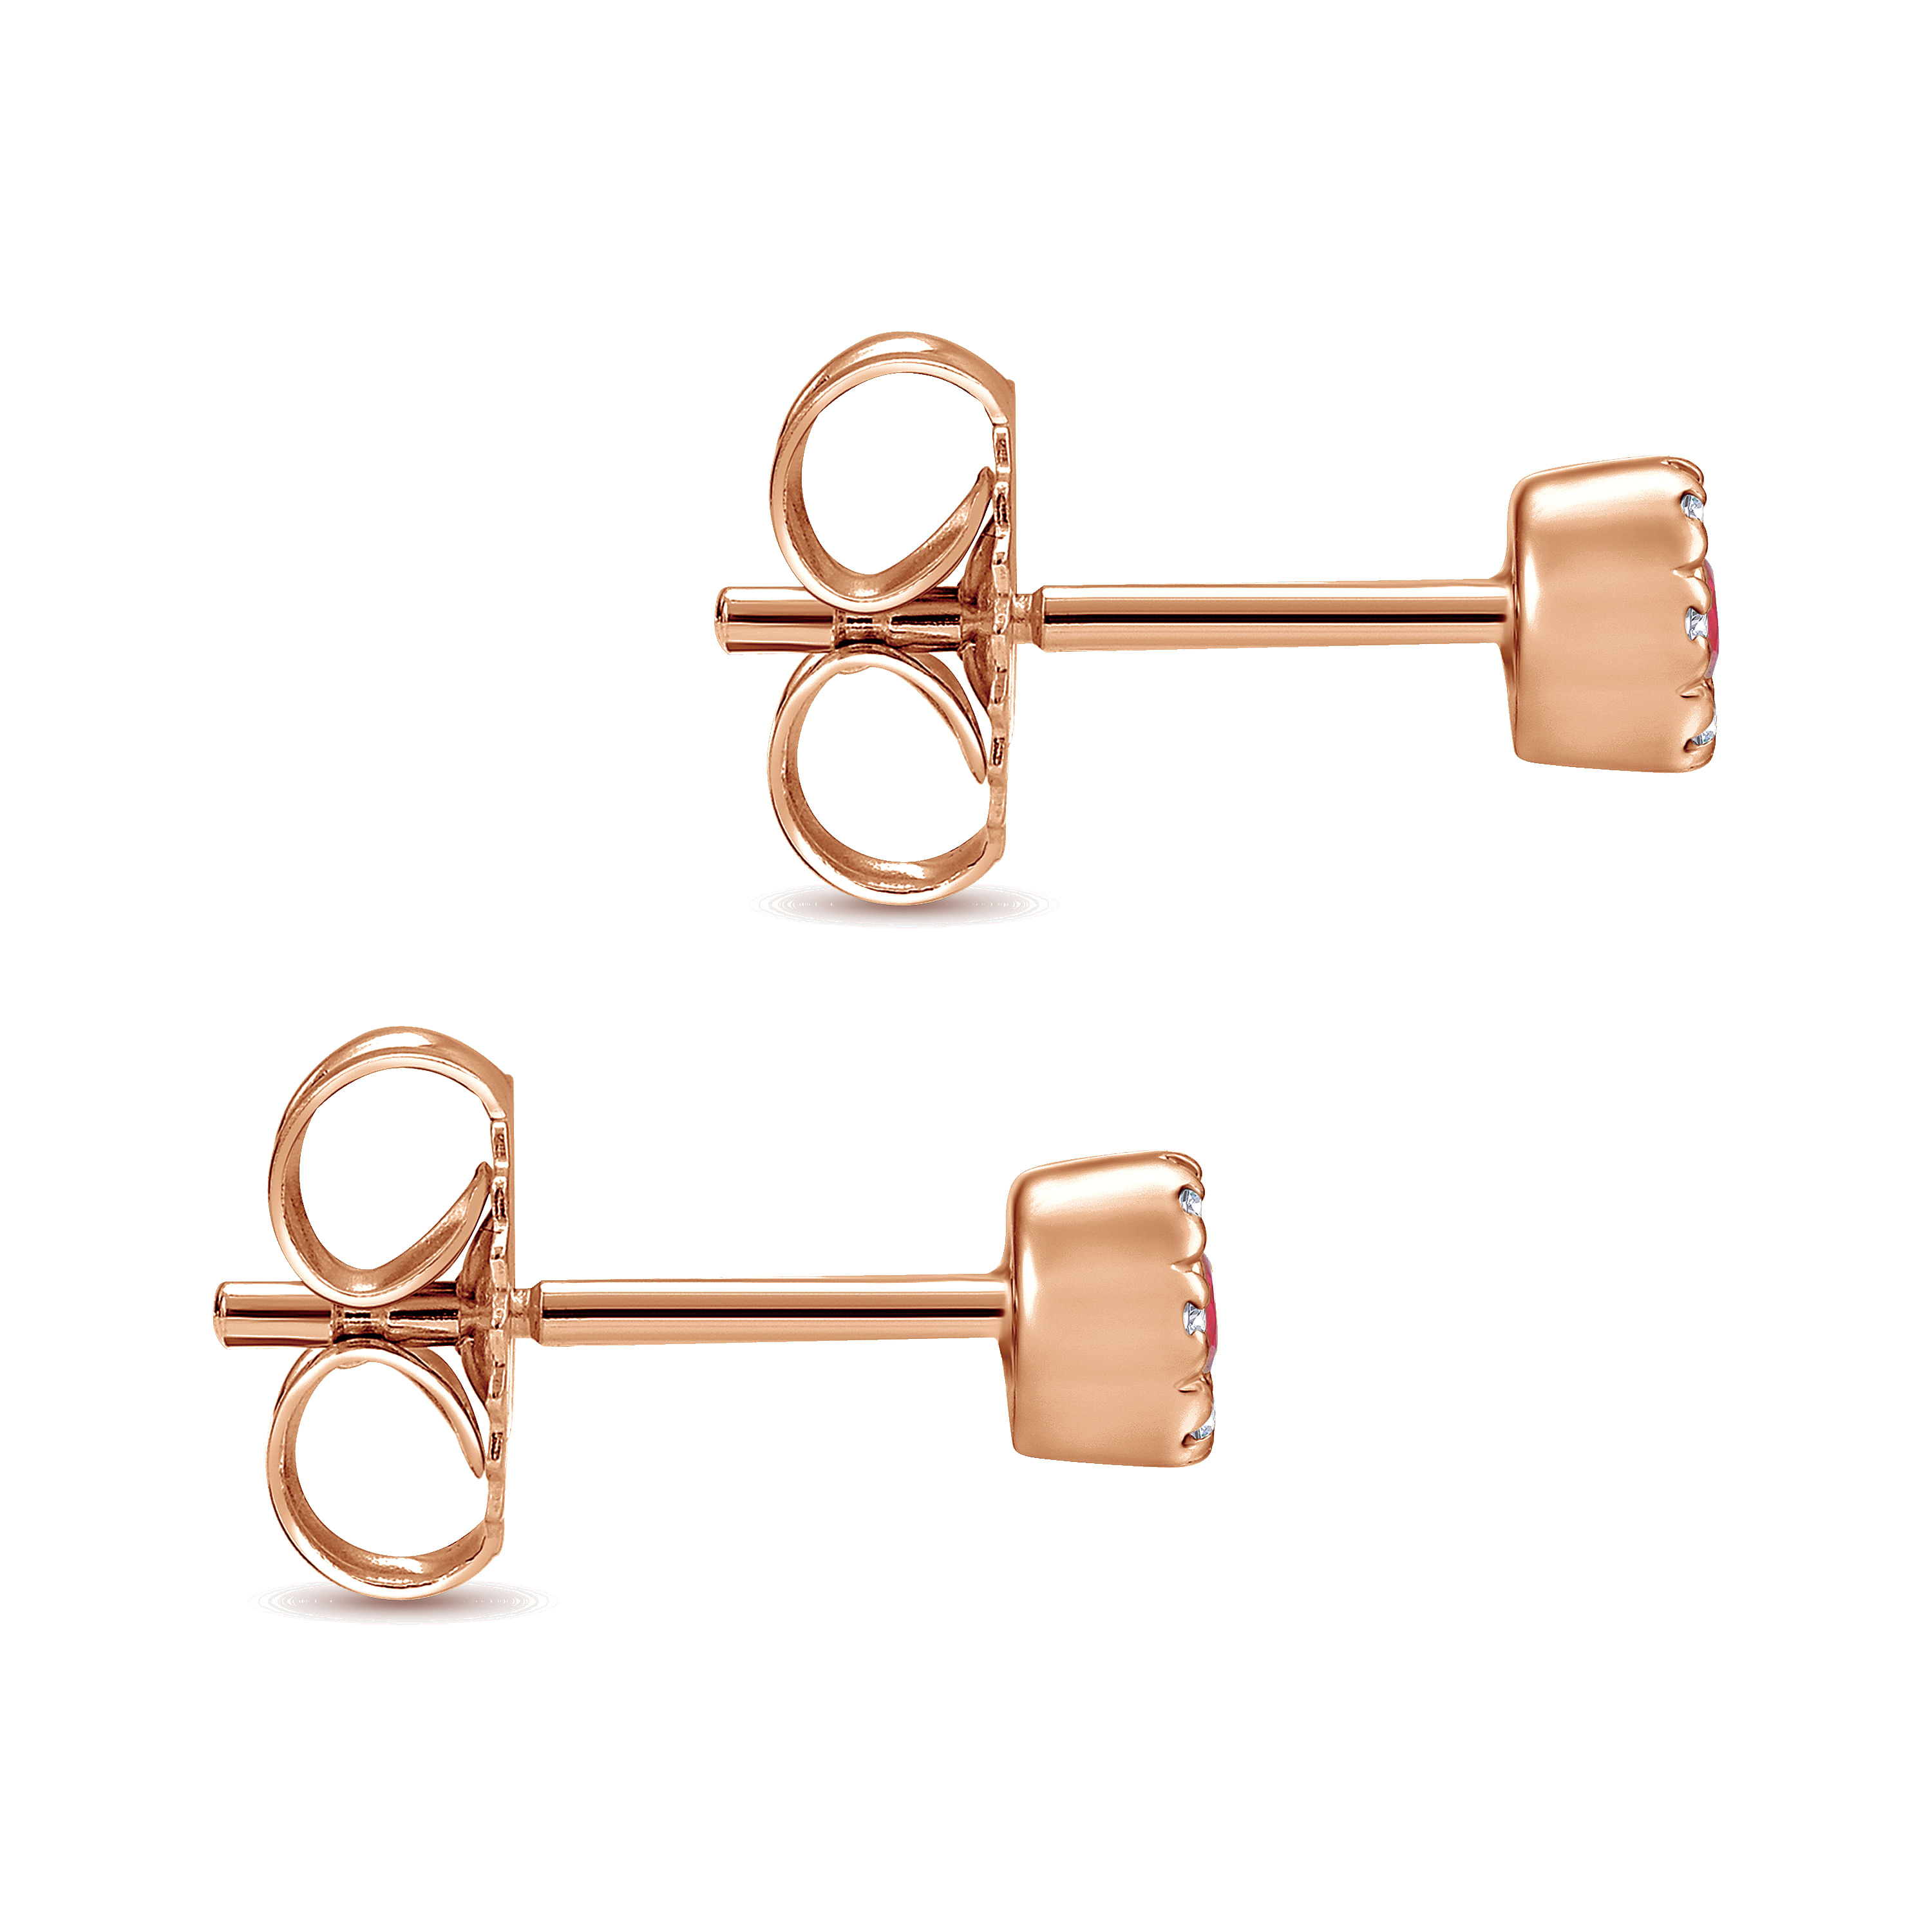 14K Rose Gold Diamond Halo Ruby Stud Earrings